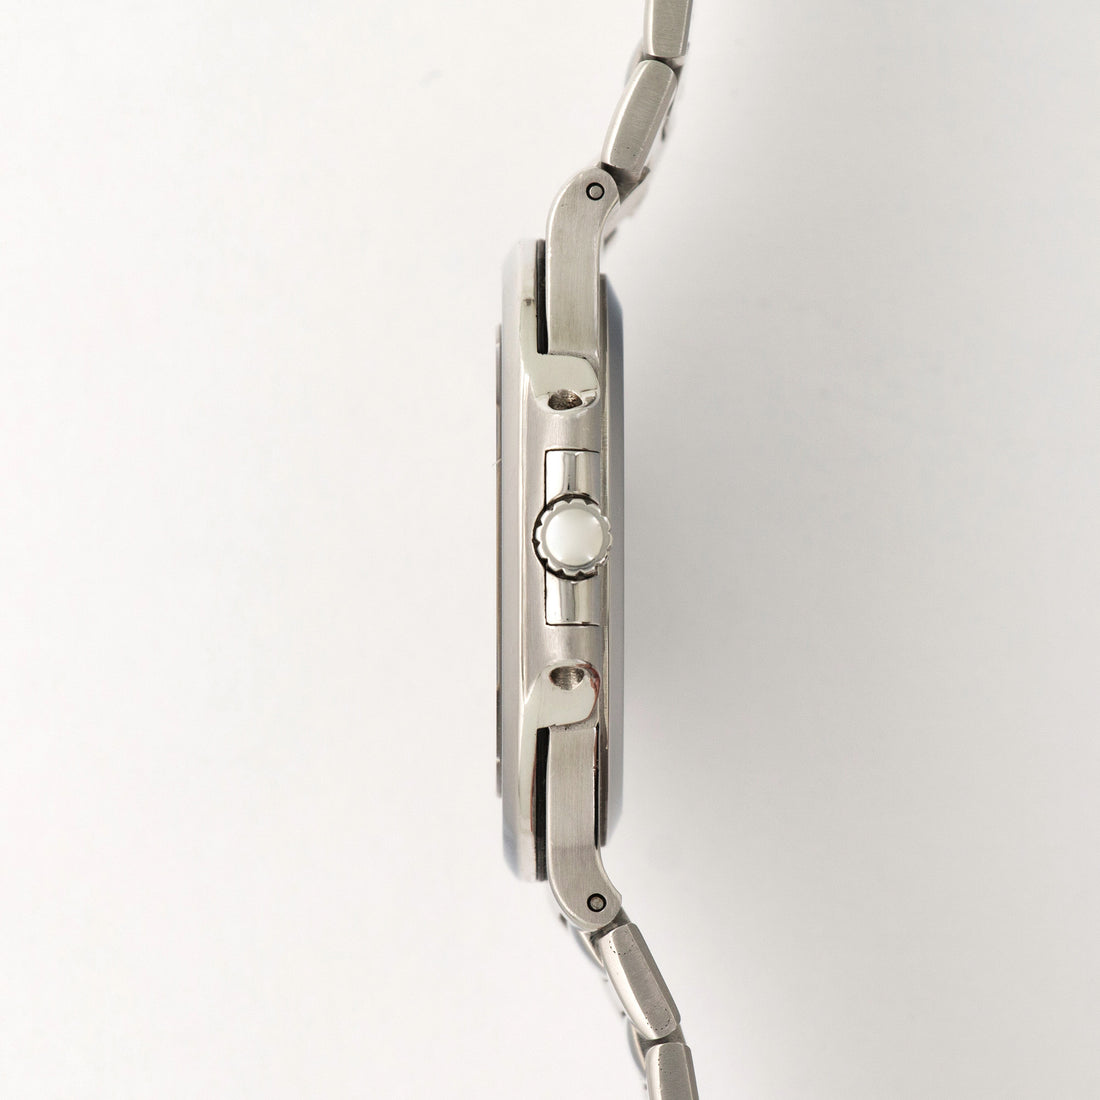 Patek Philippe Nautilus Jumbo Watch Ref. 3700 with Original Warranty